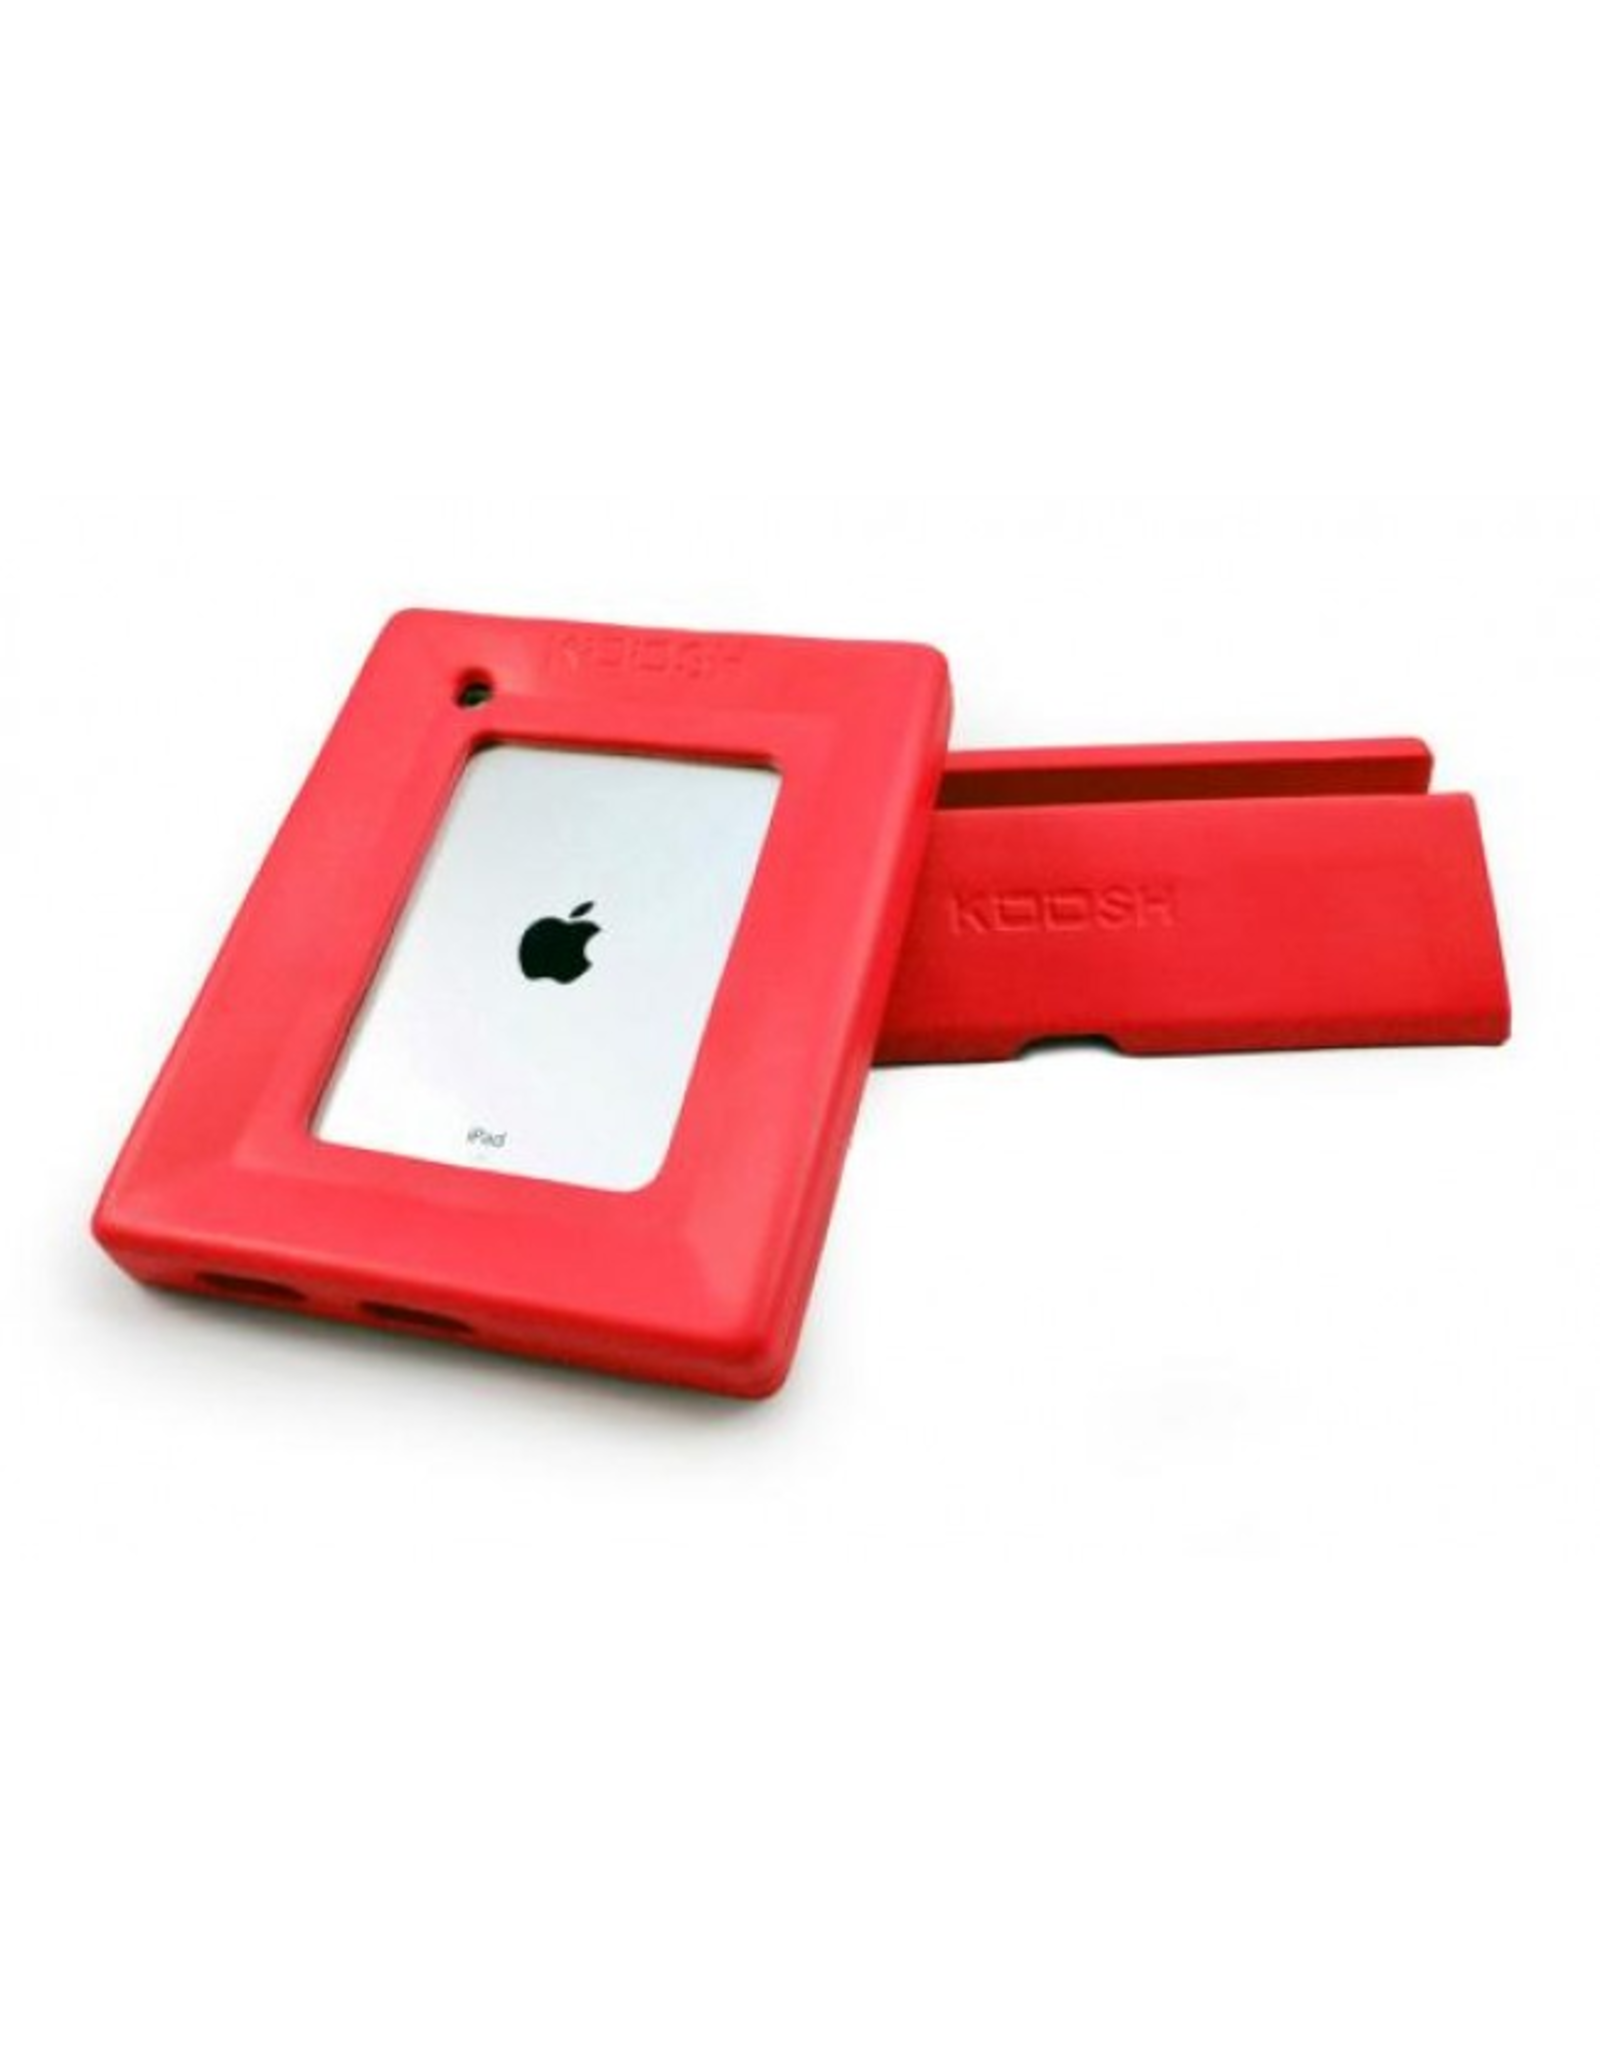 Koosh Koosh Frame and Stand for iPad2/3/4 - Red